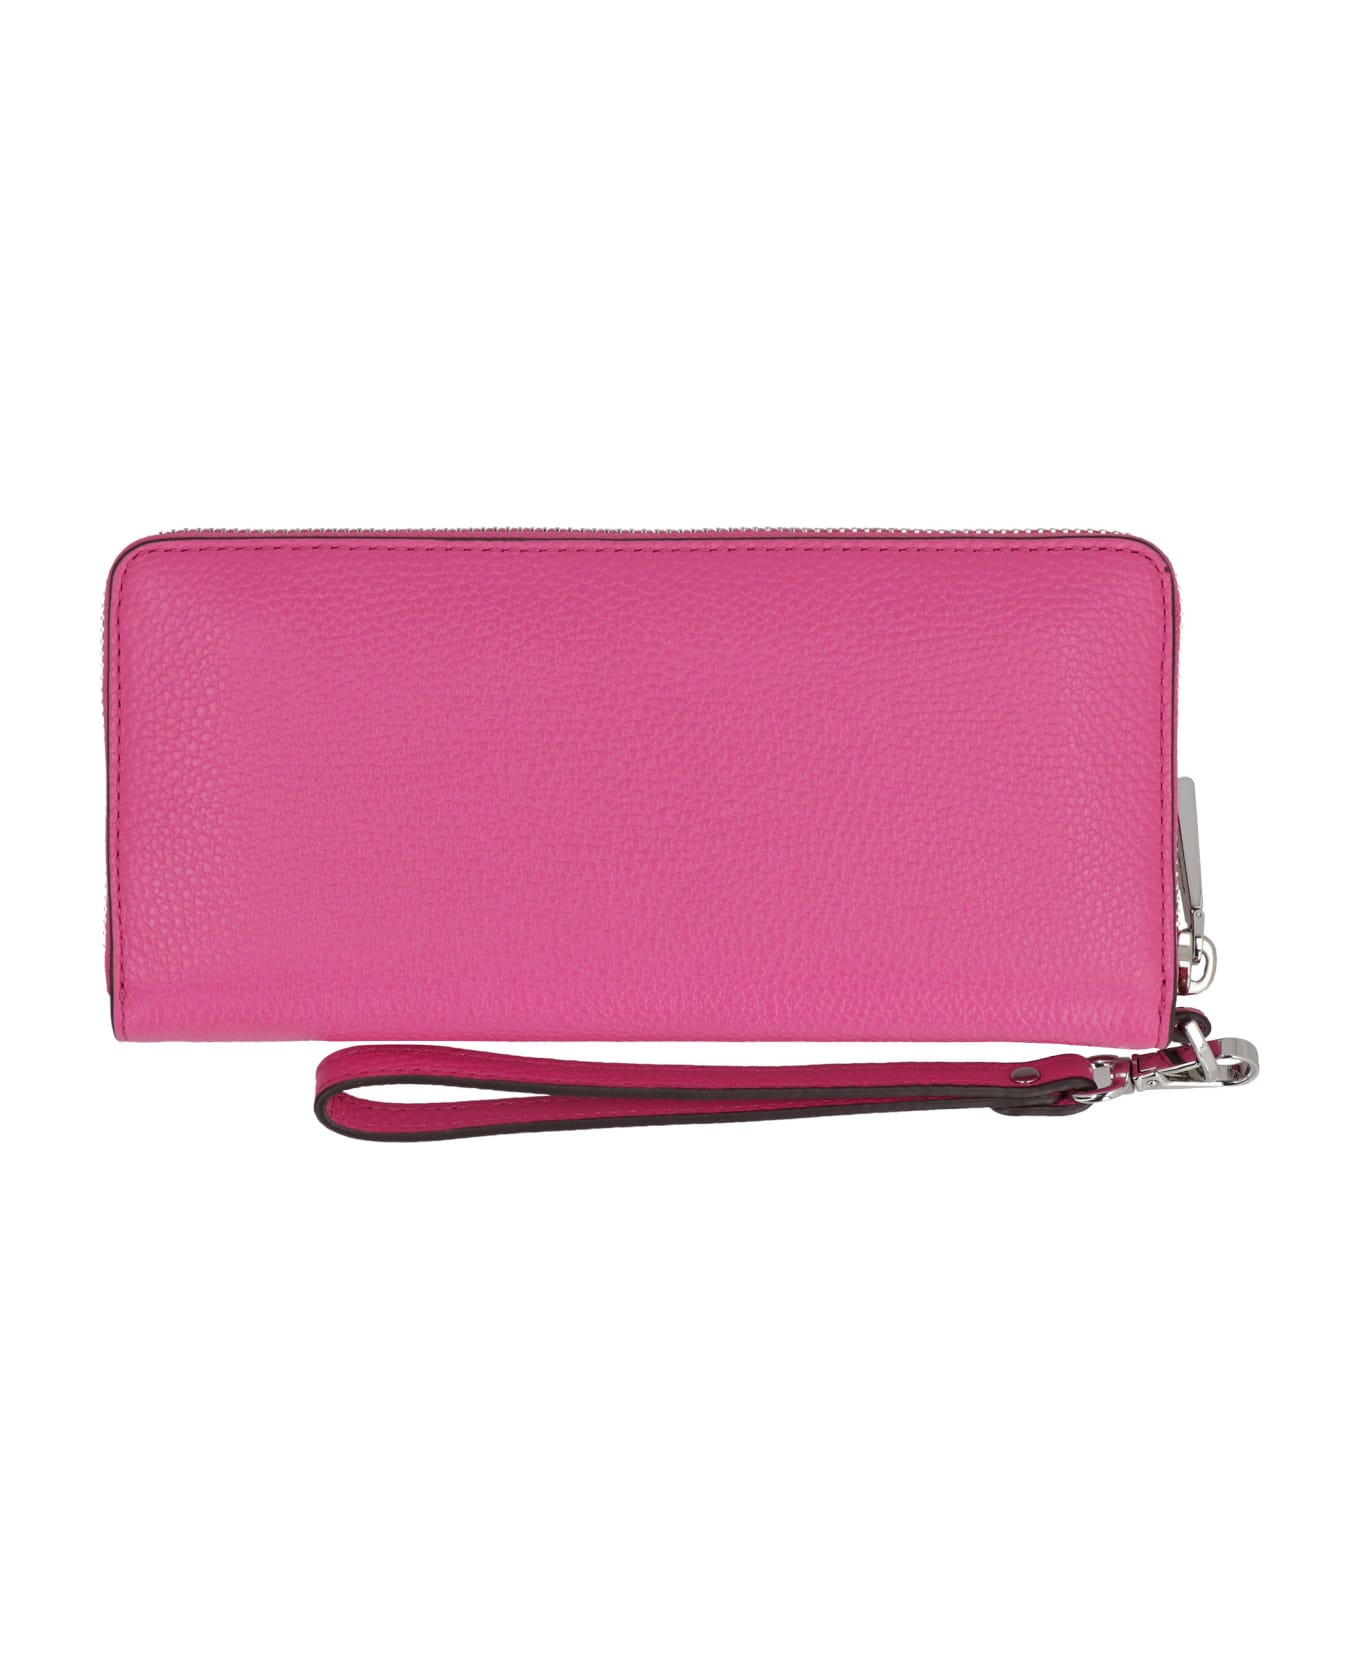 MICHAEL Michael Kors Jet Set Continental Leather Wallet - Pink 財布